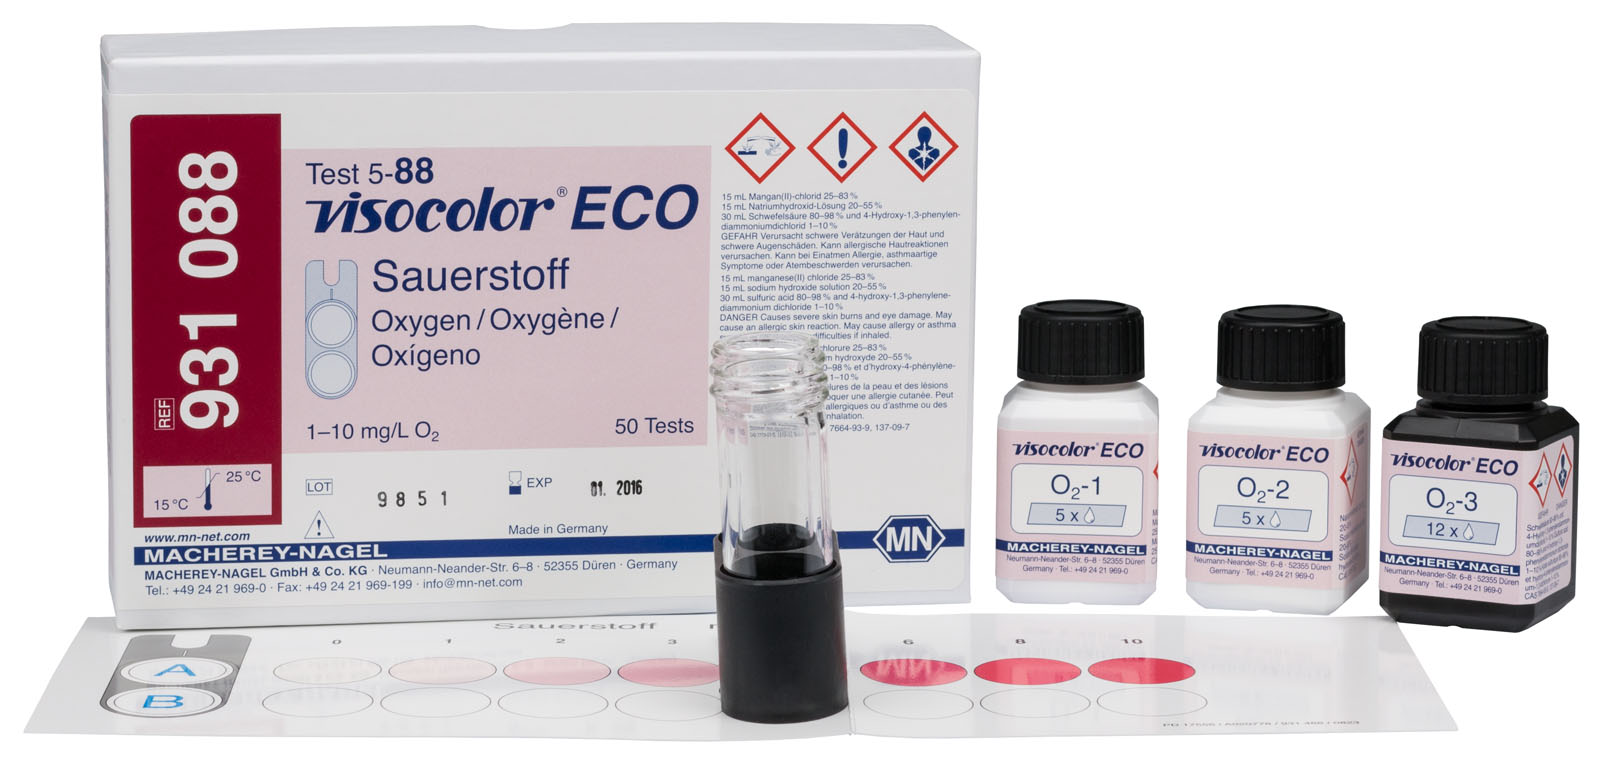 VISOCOLOR® ECO Oxygen Test Kit